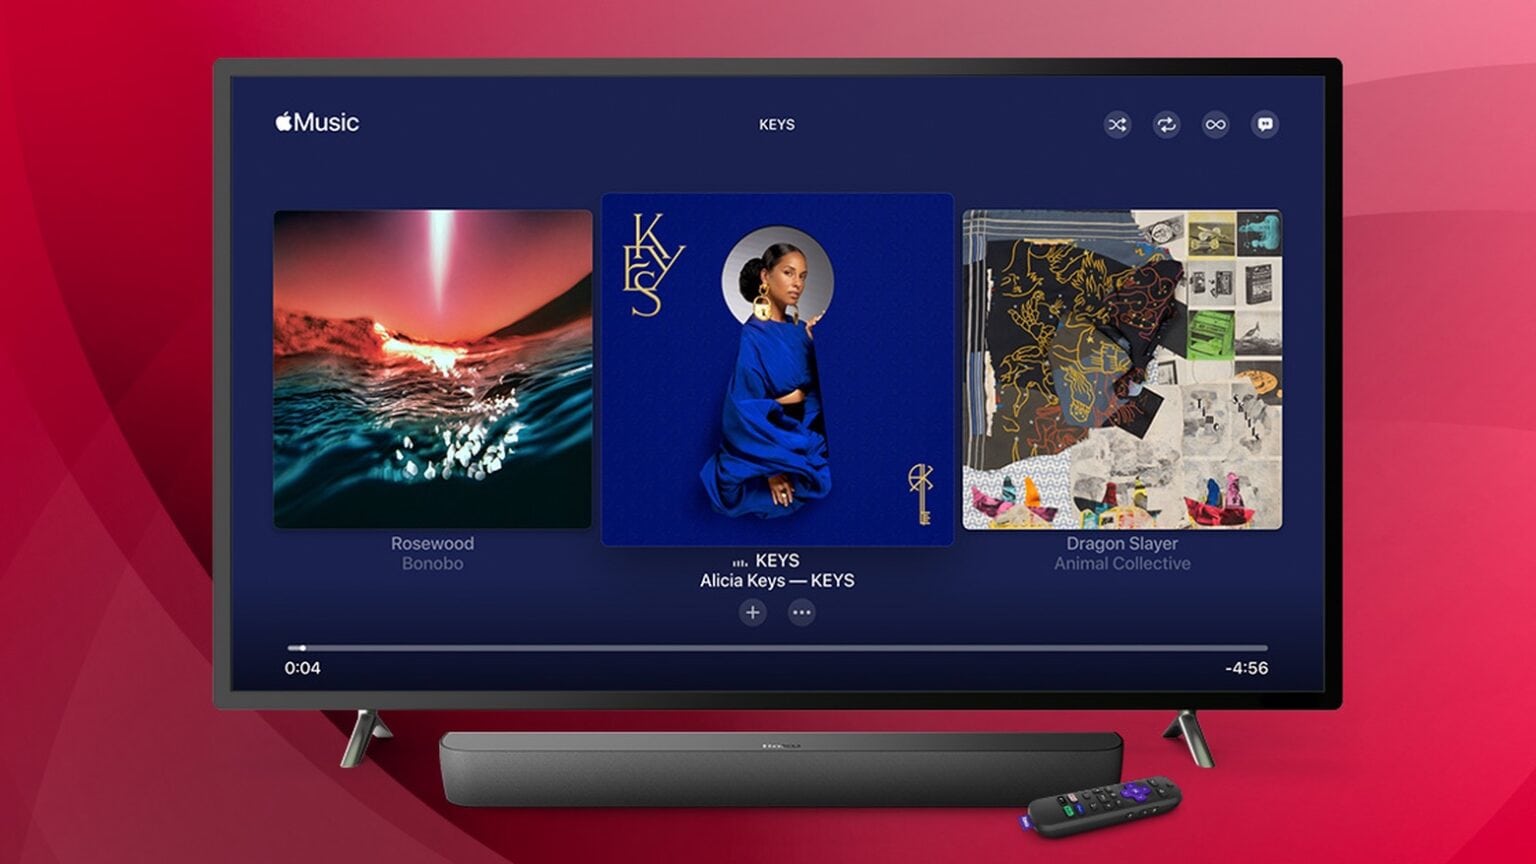 Roku users can now enjoy Apple Music